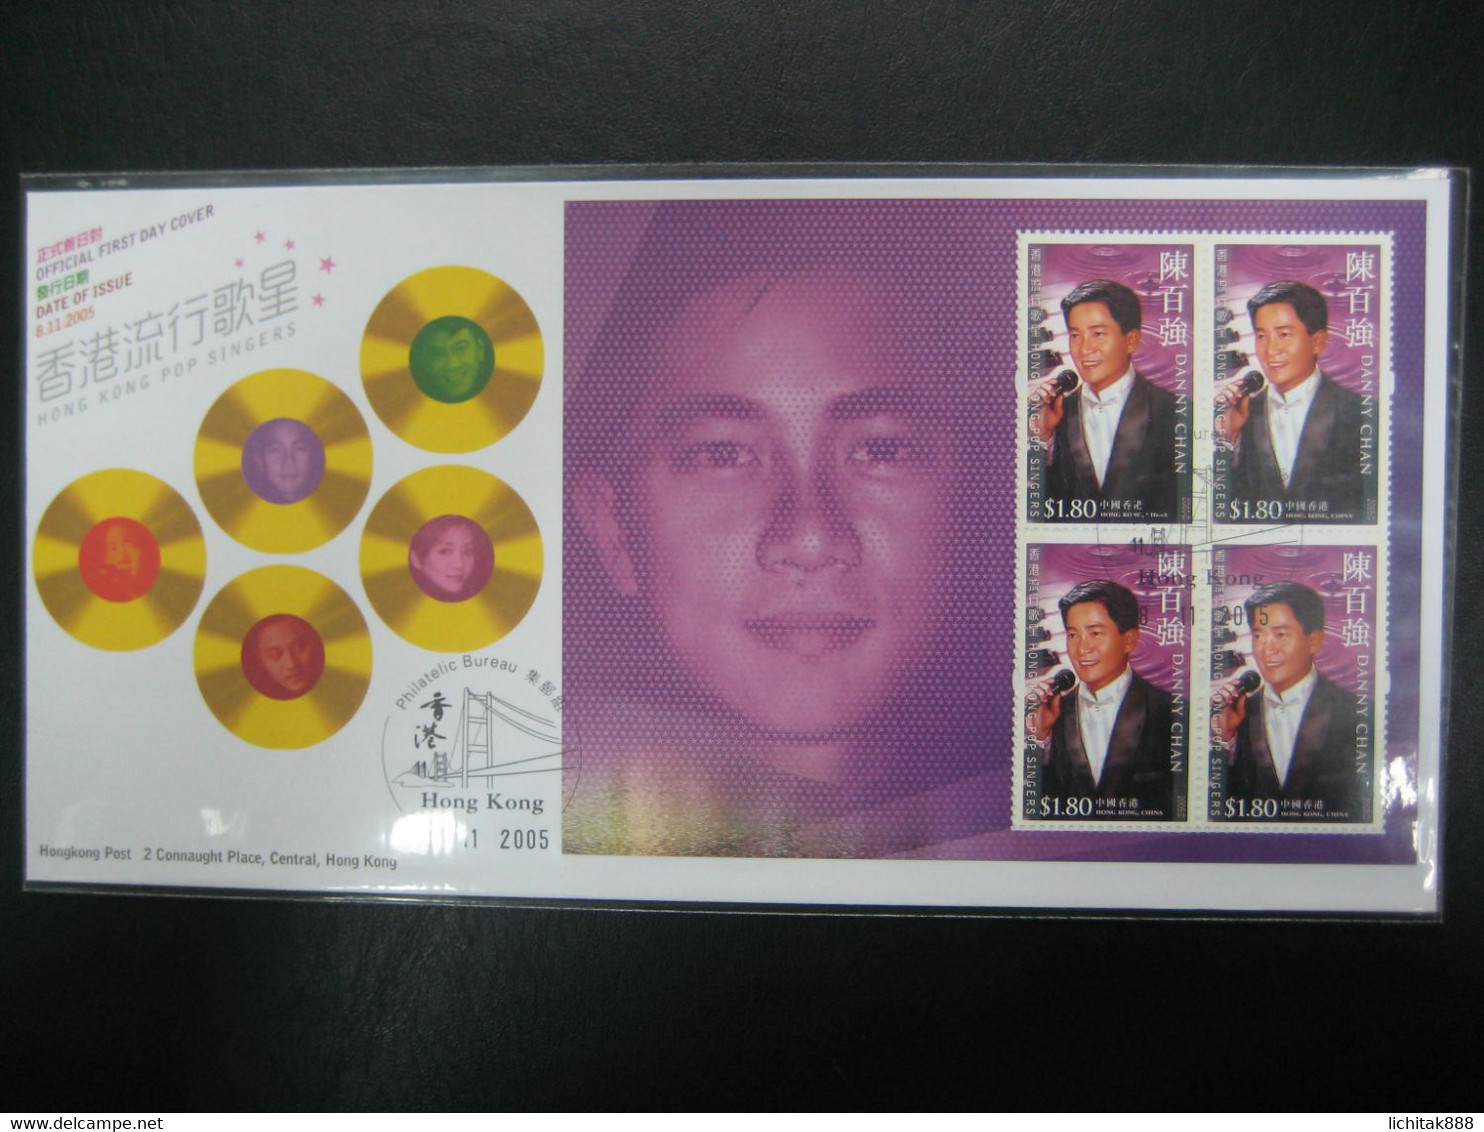 China Hong Kong 2005 Pop Singer Stamp Beyond Leslie Anita Stamps Booklet FDC - FDC